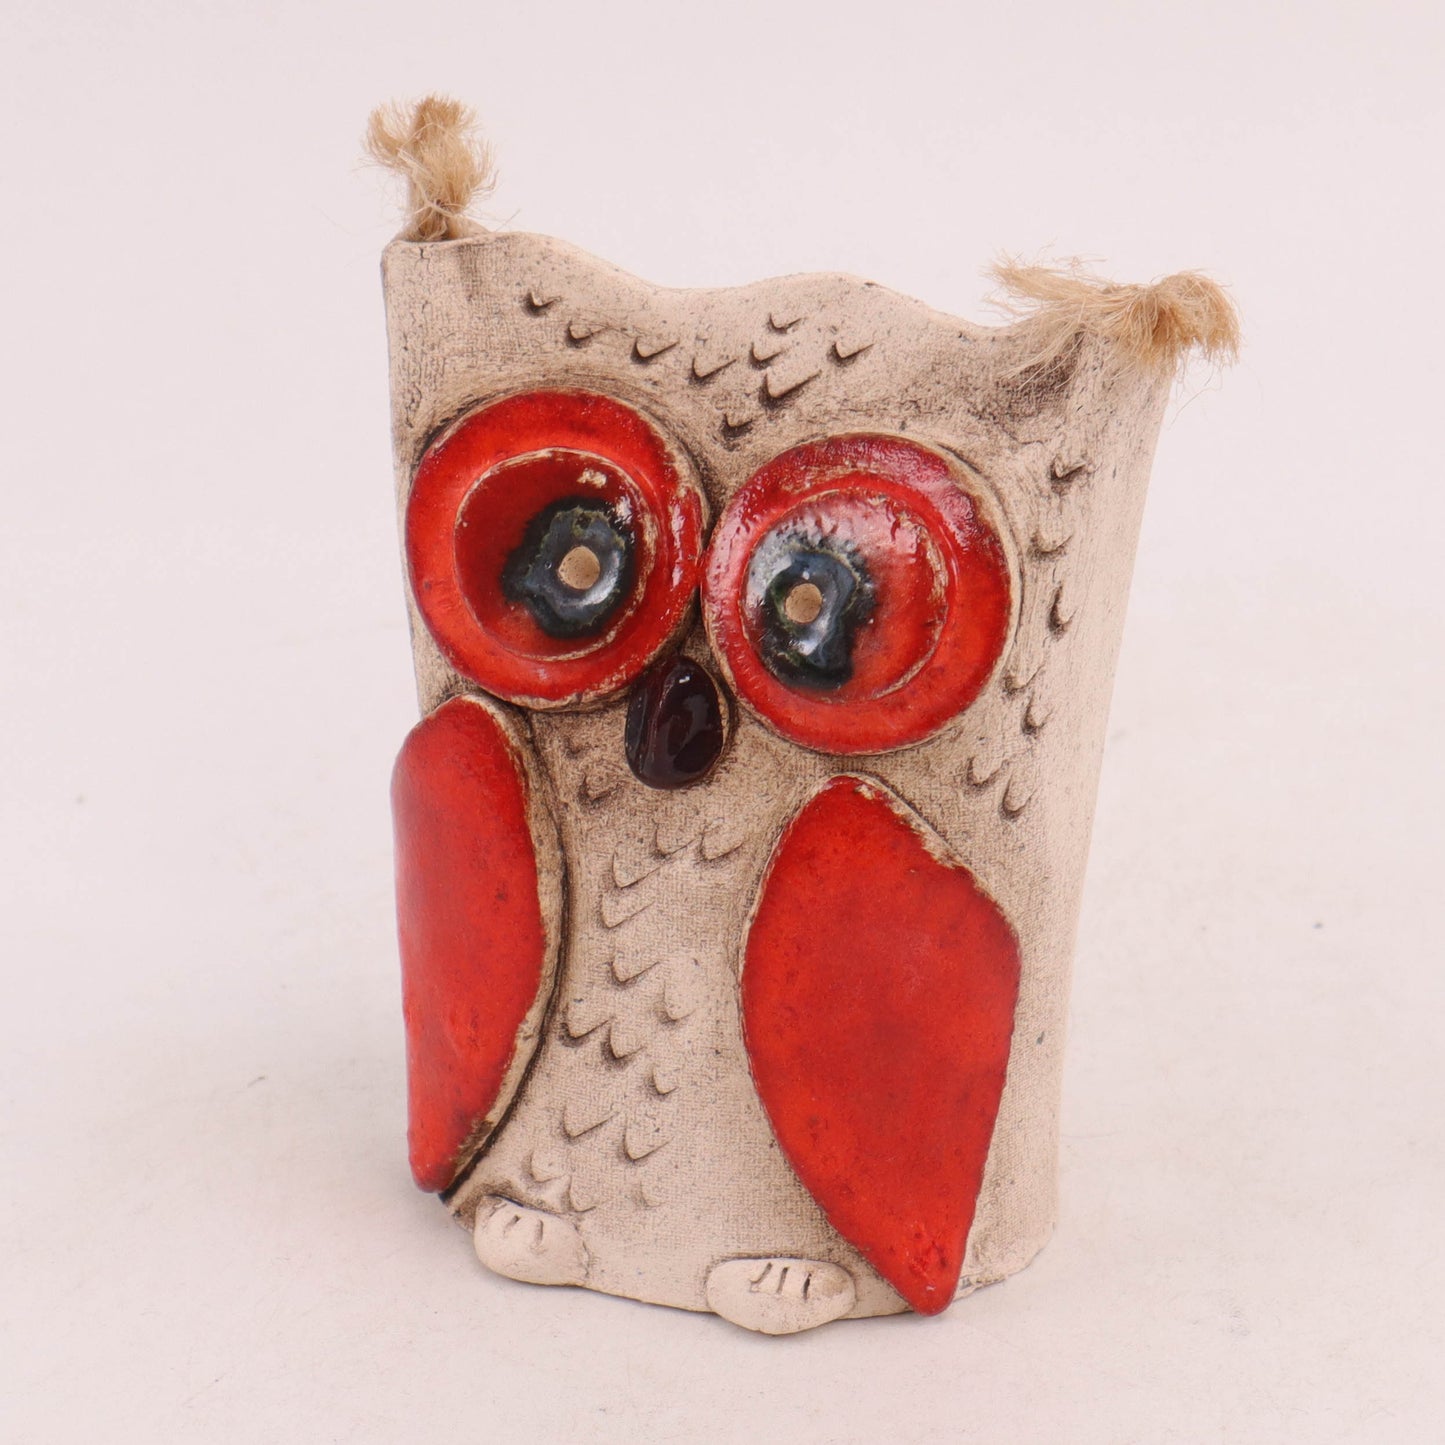 3"x4" Owl Figurine. Pattern: Red